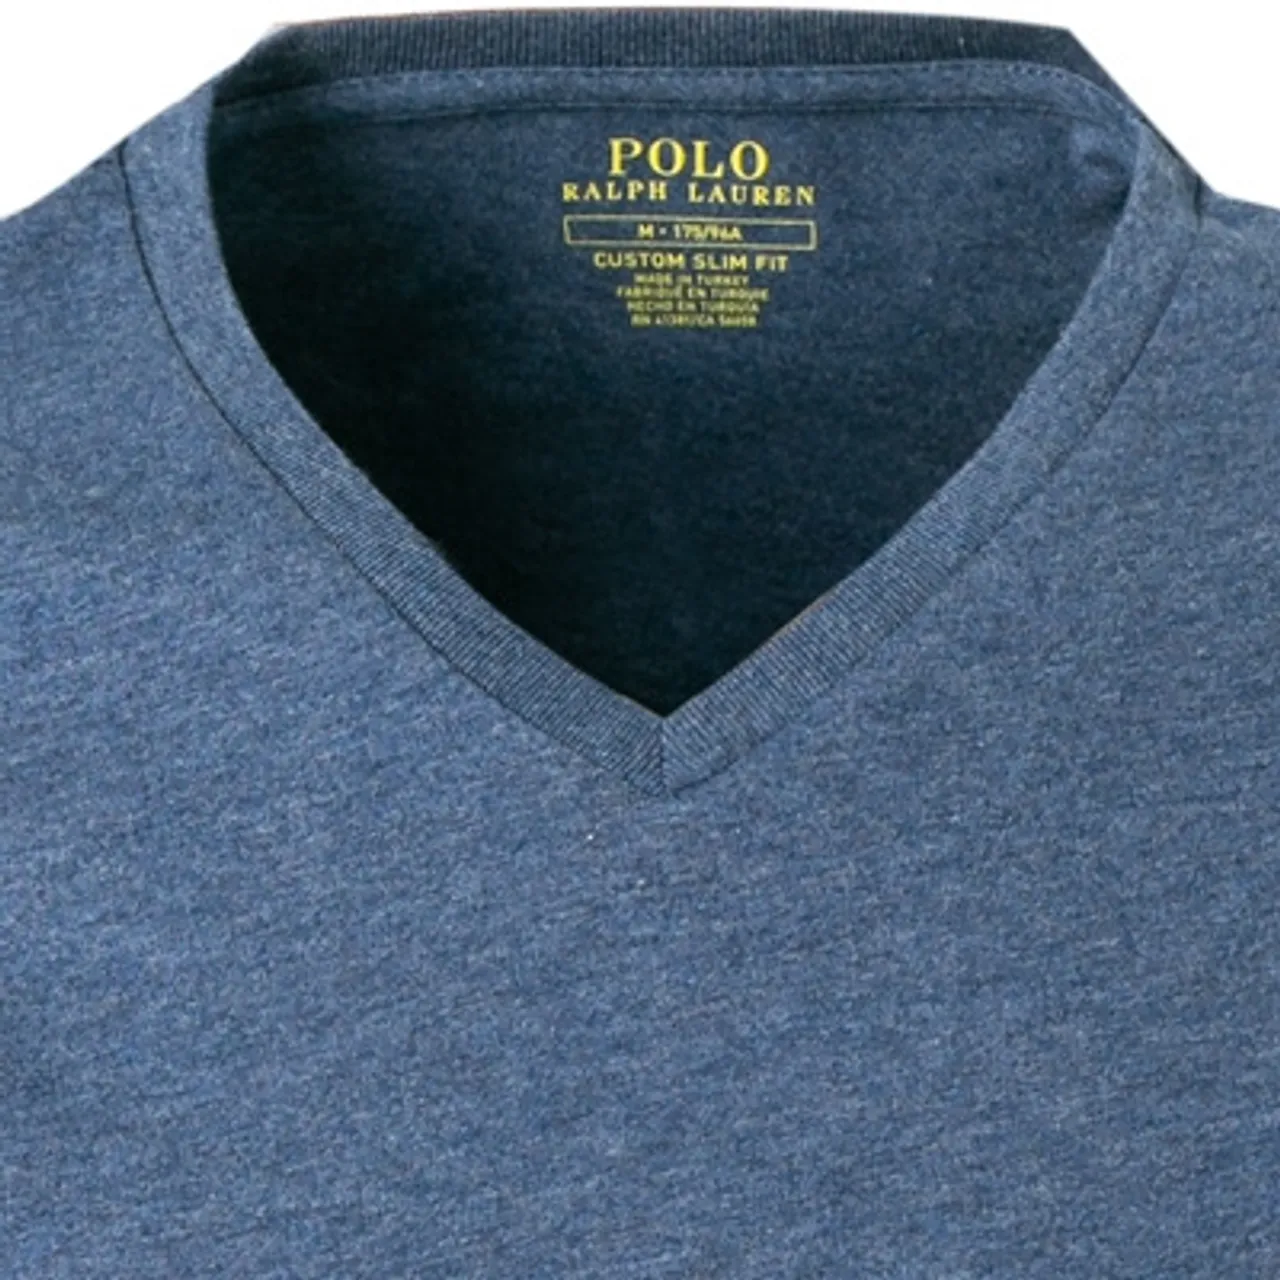 Polo Ralph Lauren Herren T-Shirt blau Baumwolle meliert Slim Fit